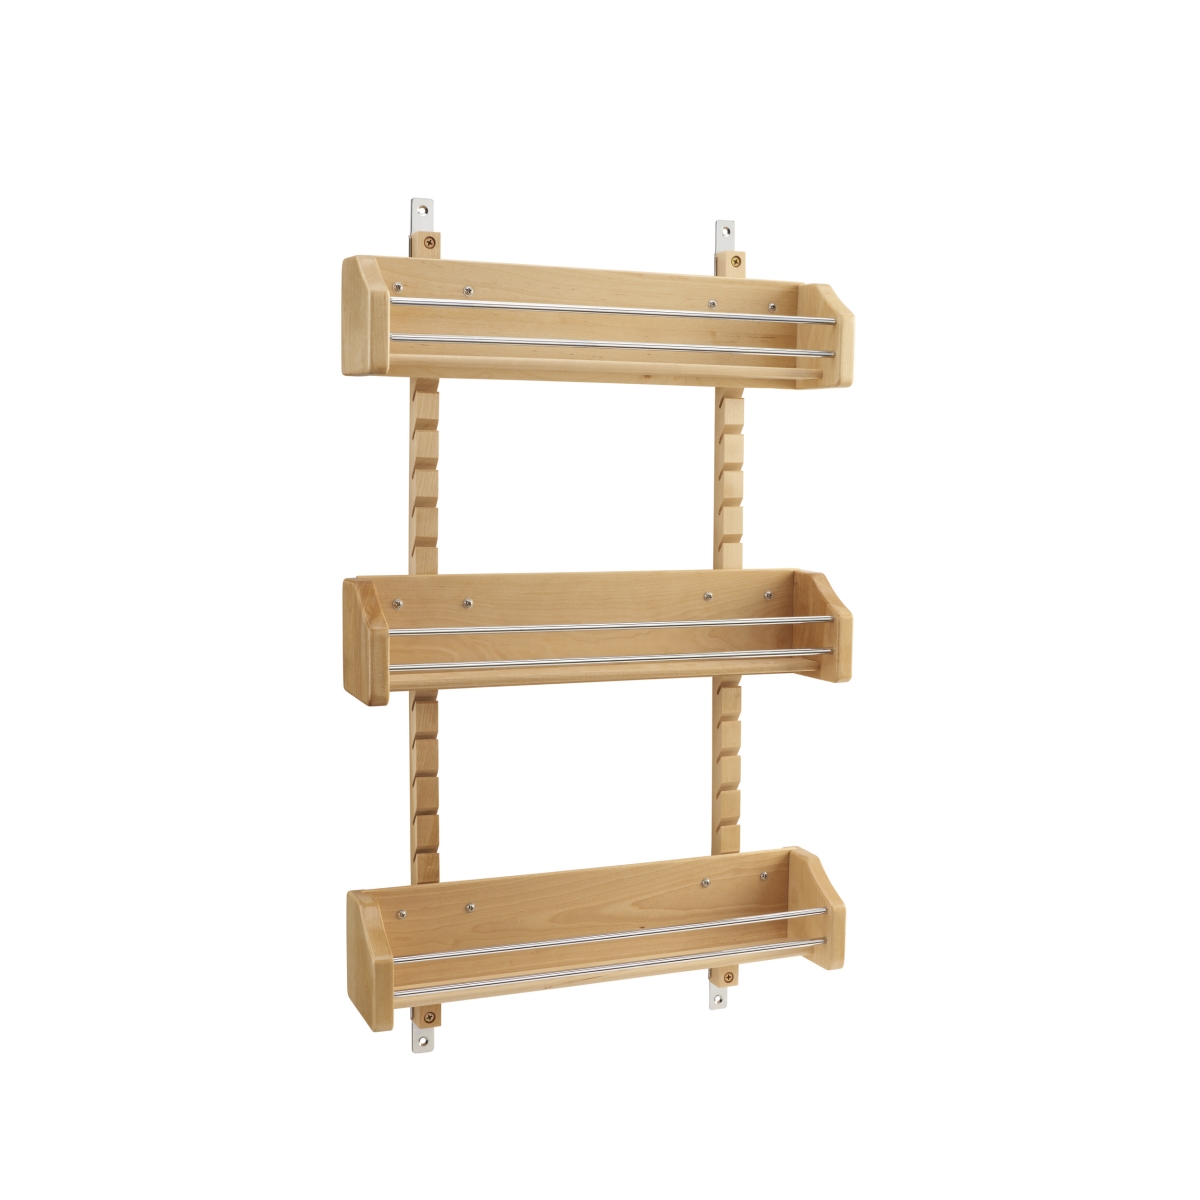 Rev A Shelf Rs4asr.21bin Door Storage Adjustable Wood Spice Shelf